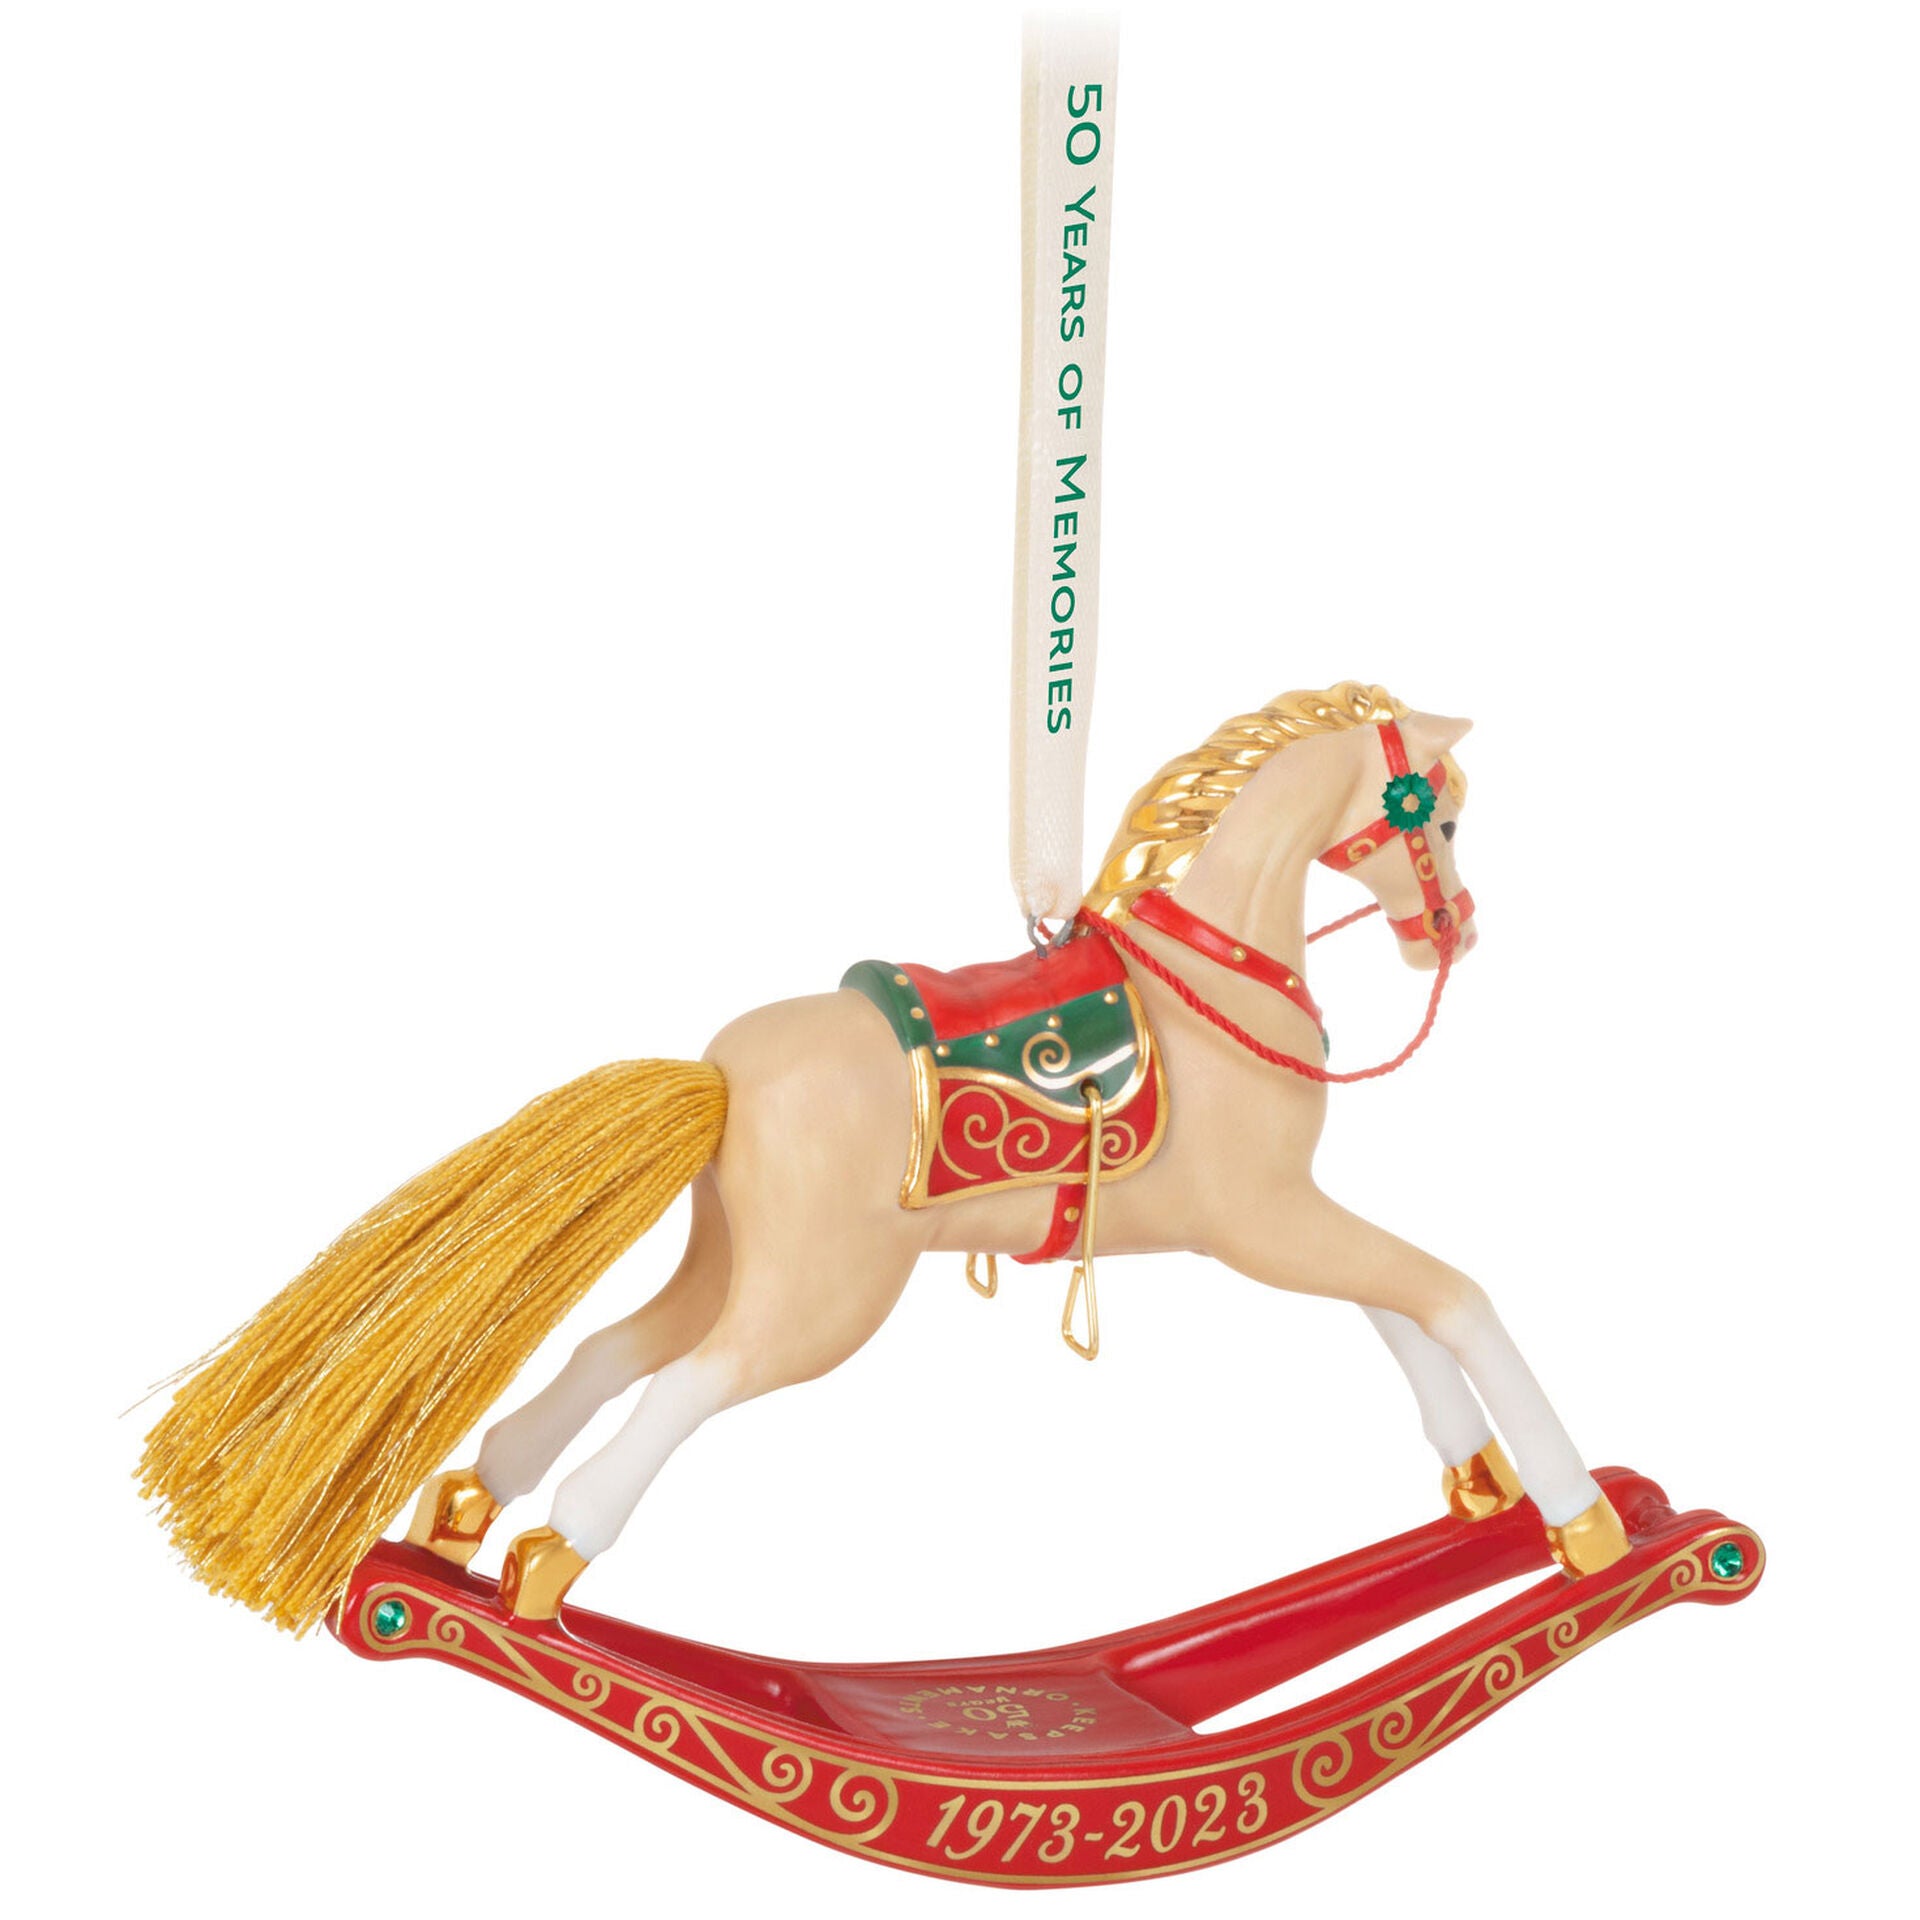 2023 50 Years of Memories Rocking Horse Special Edition Porcelain Hallmark Keepsake Ornament